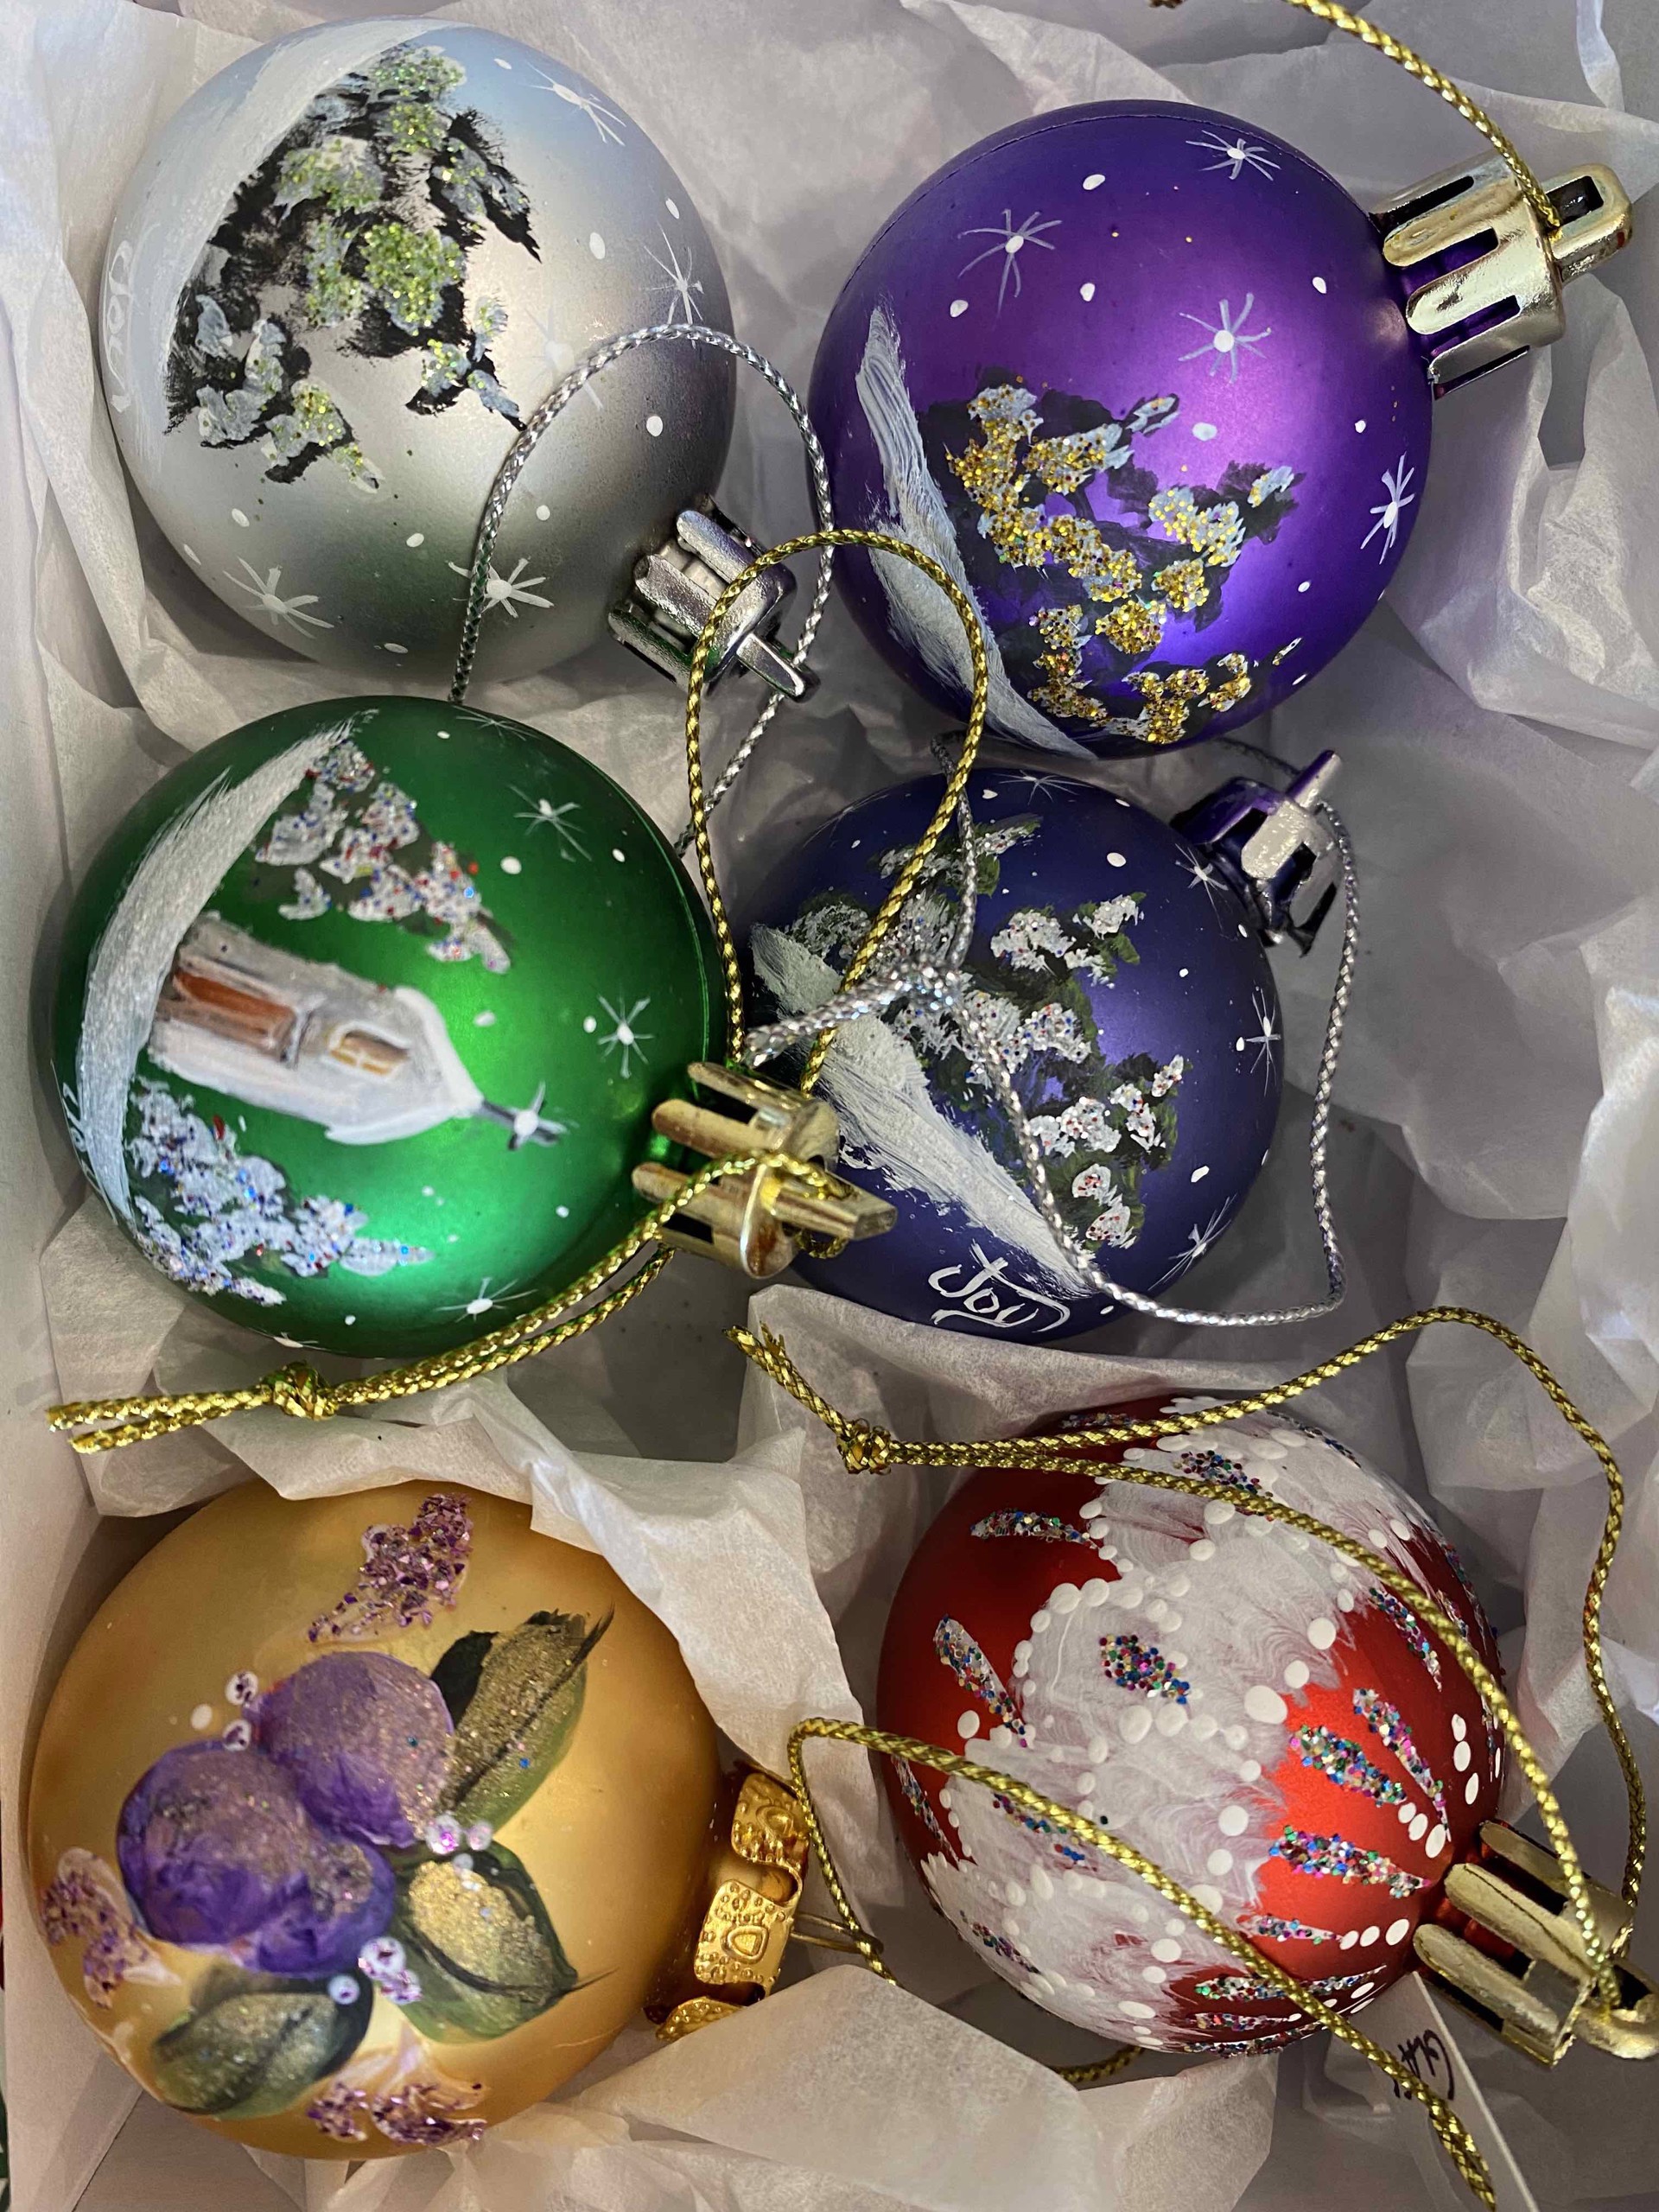 6 Miniature Christmas Balls by Joy McCallister